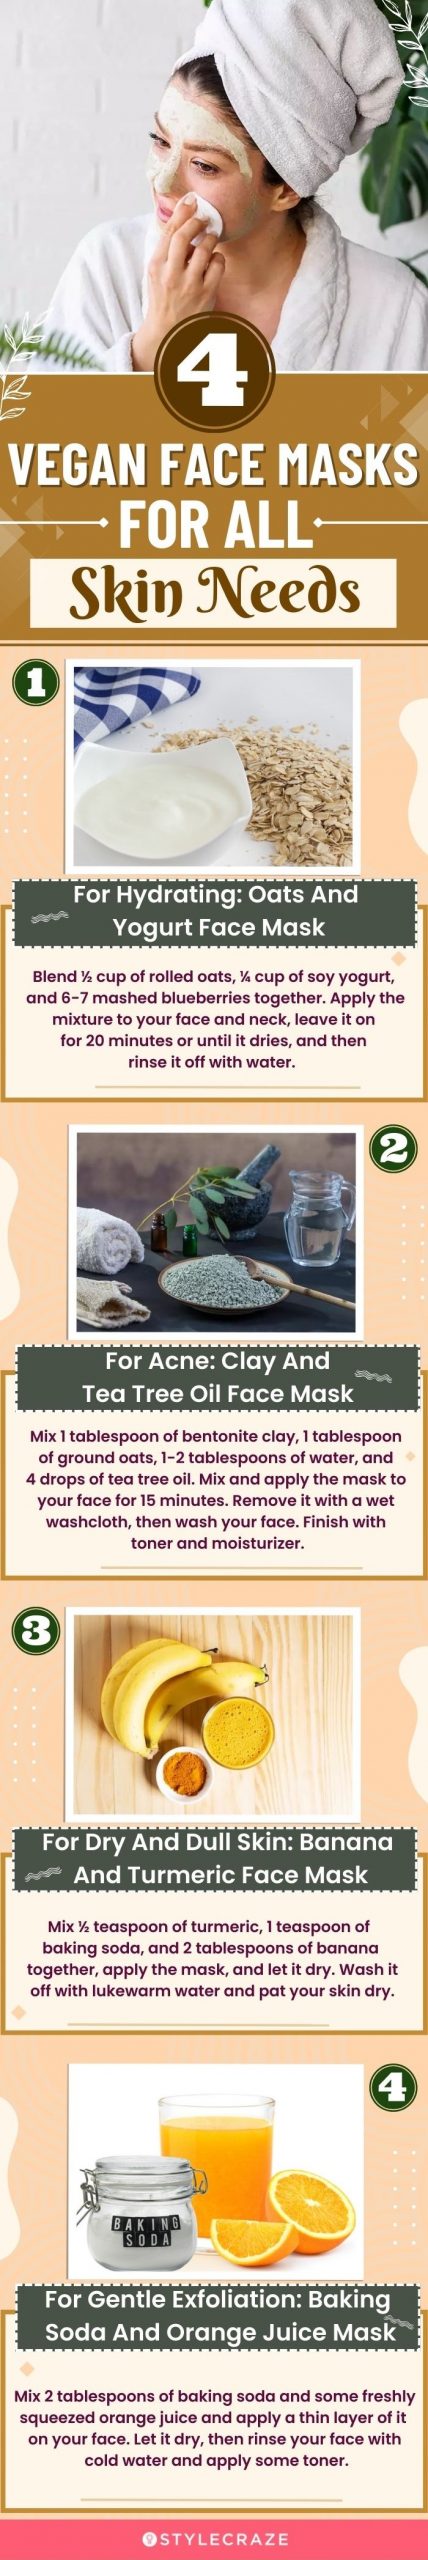 4 vegan face masks for all skin needs (infographic)